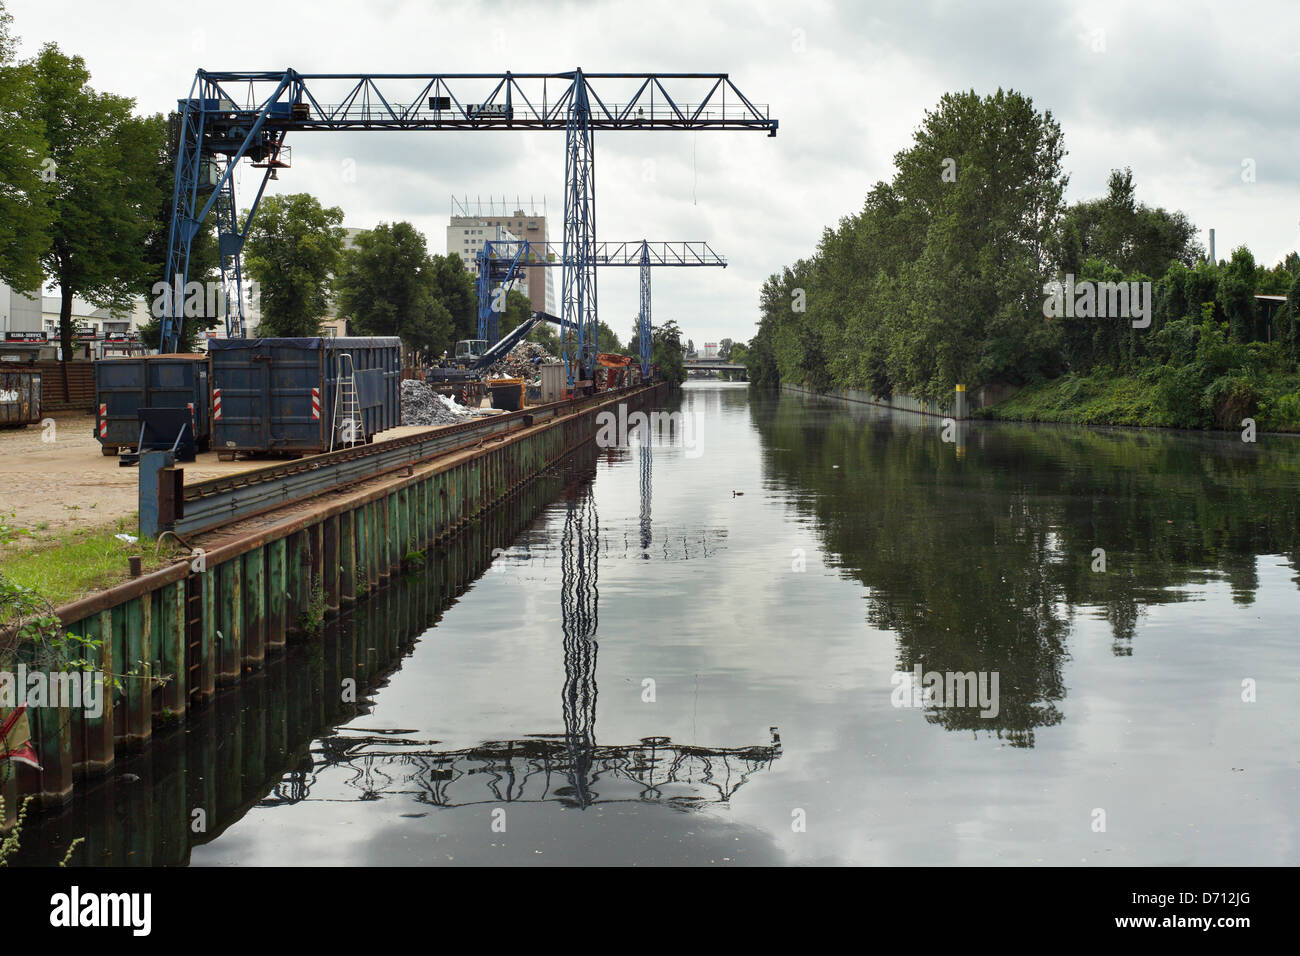 Berlin, Germany, Portalkraene a Schrotthaendlers on a navigable canal Stock Photo